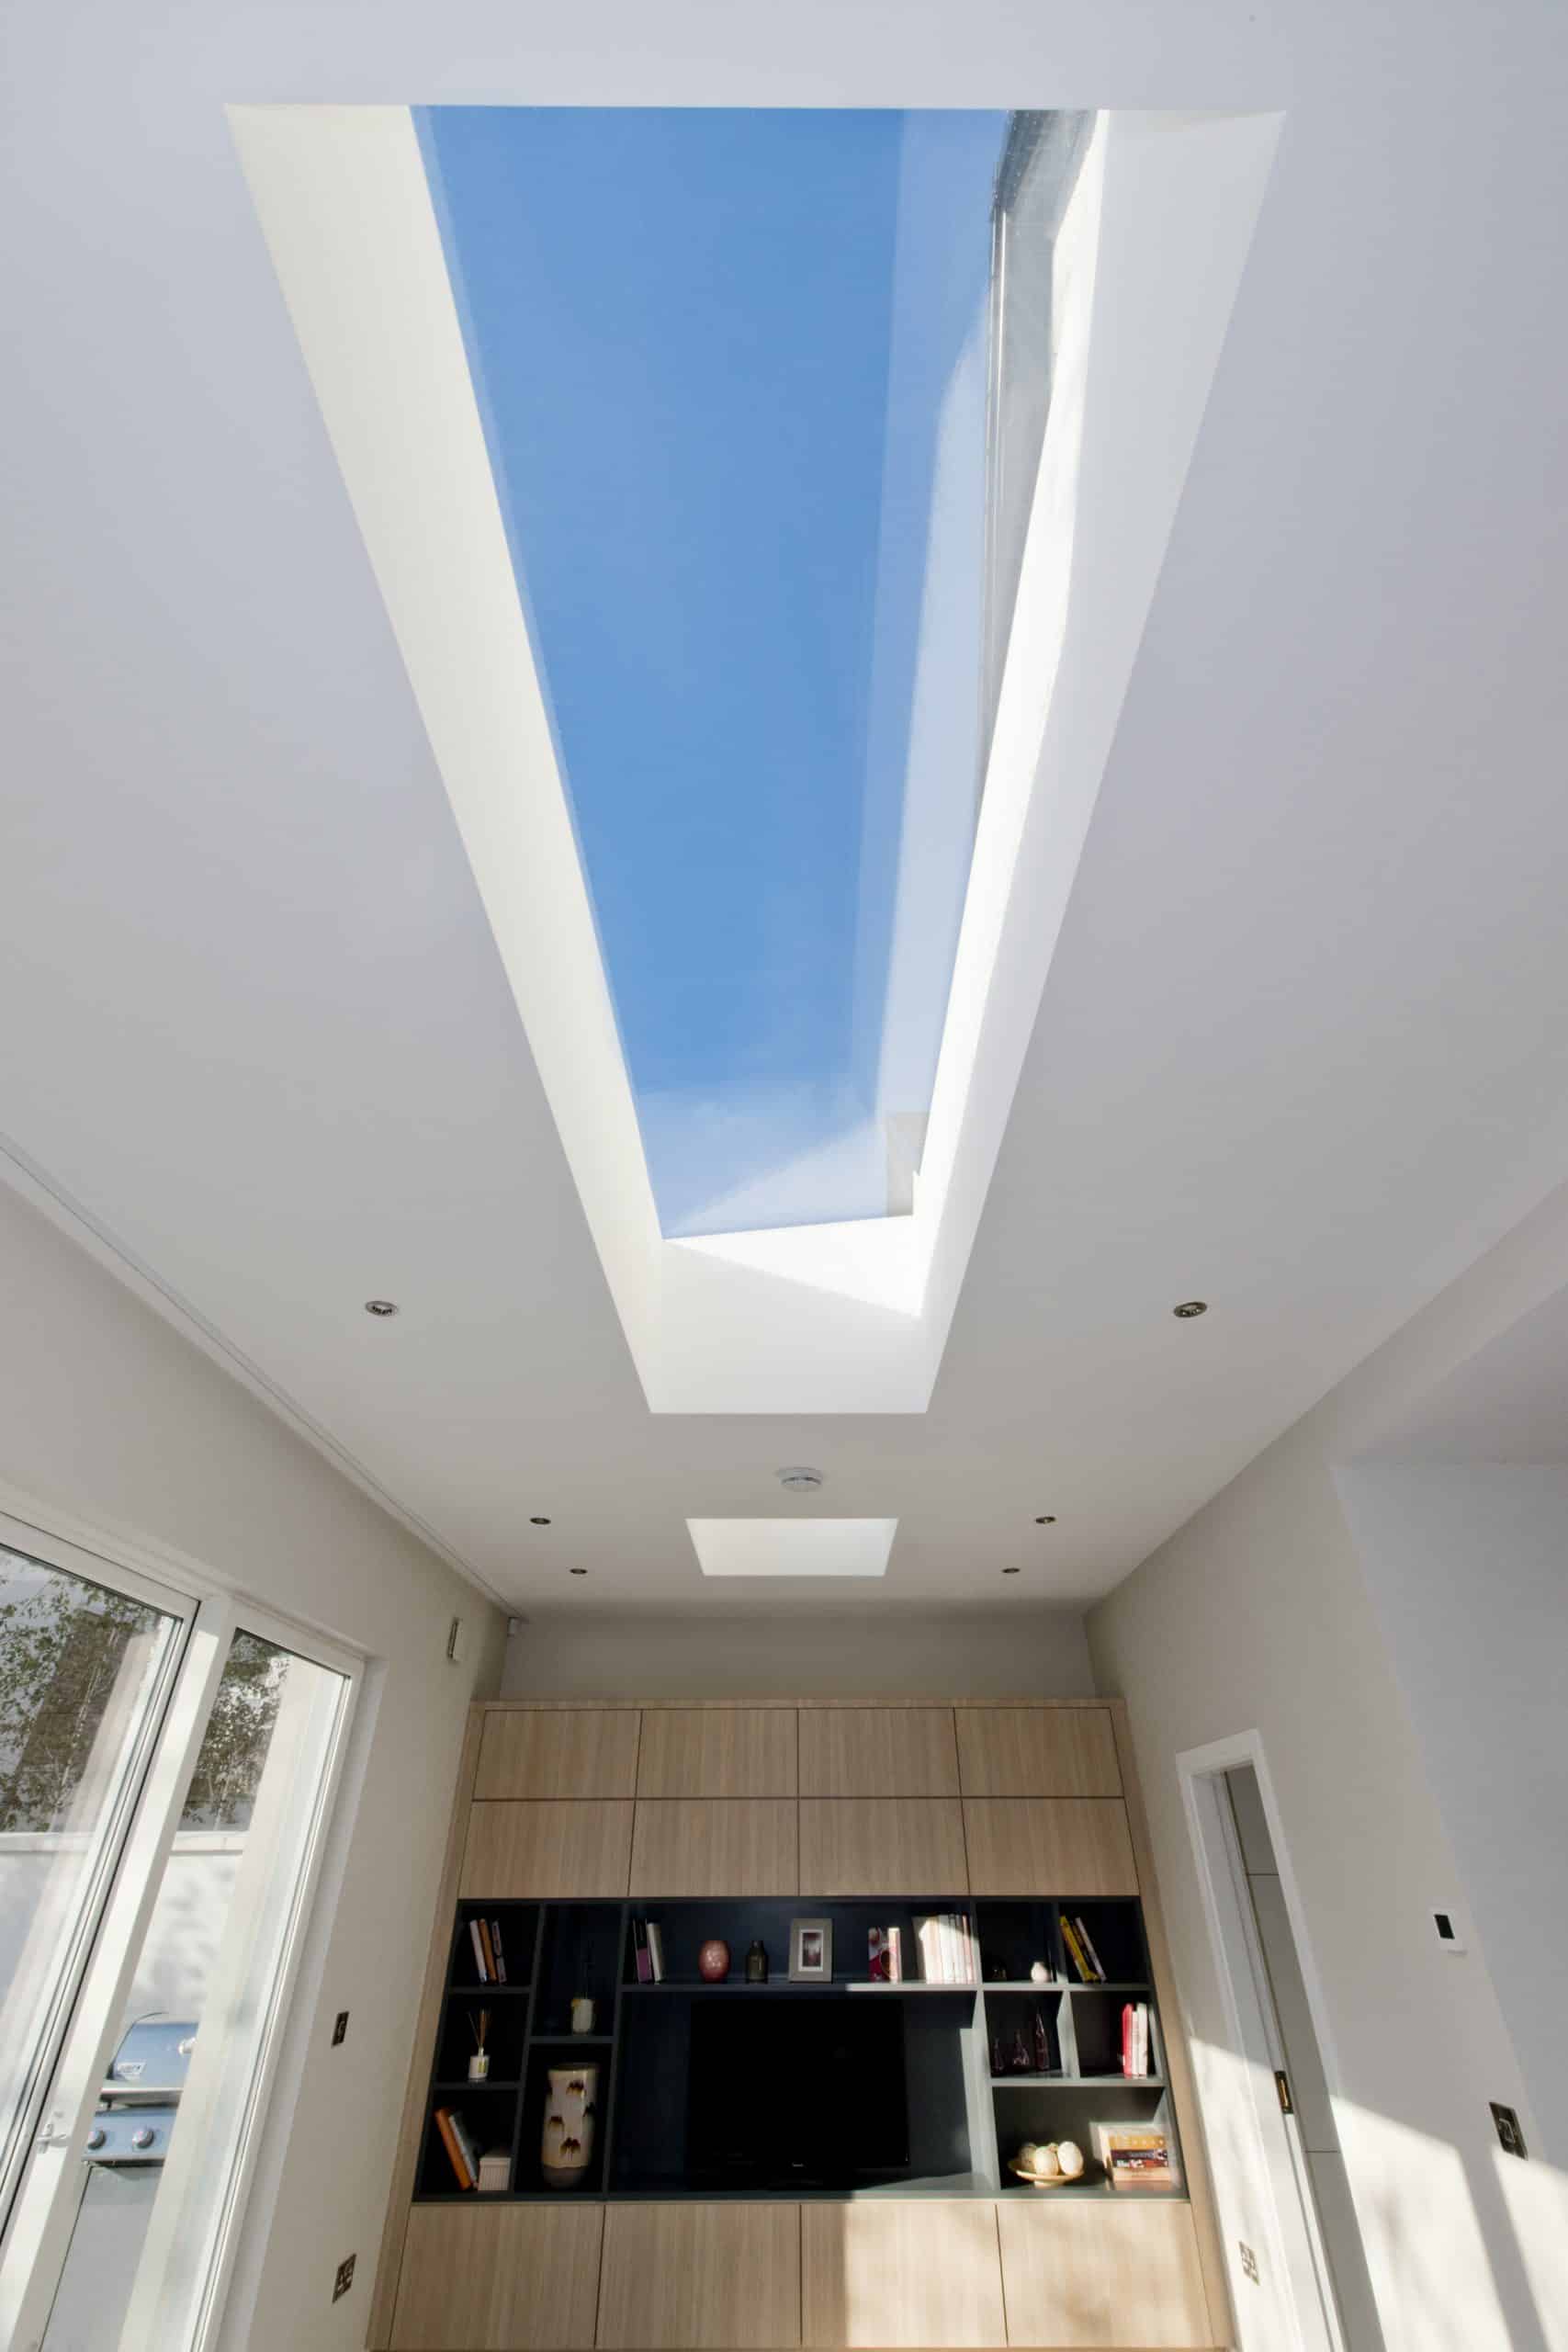 Glazing Vision Flushglaze rooflight installed in room over cupboard